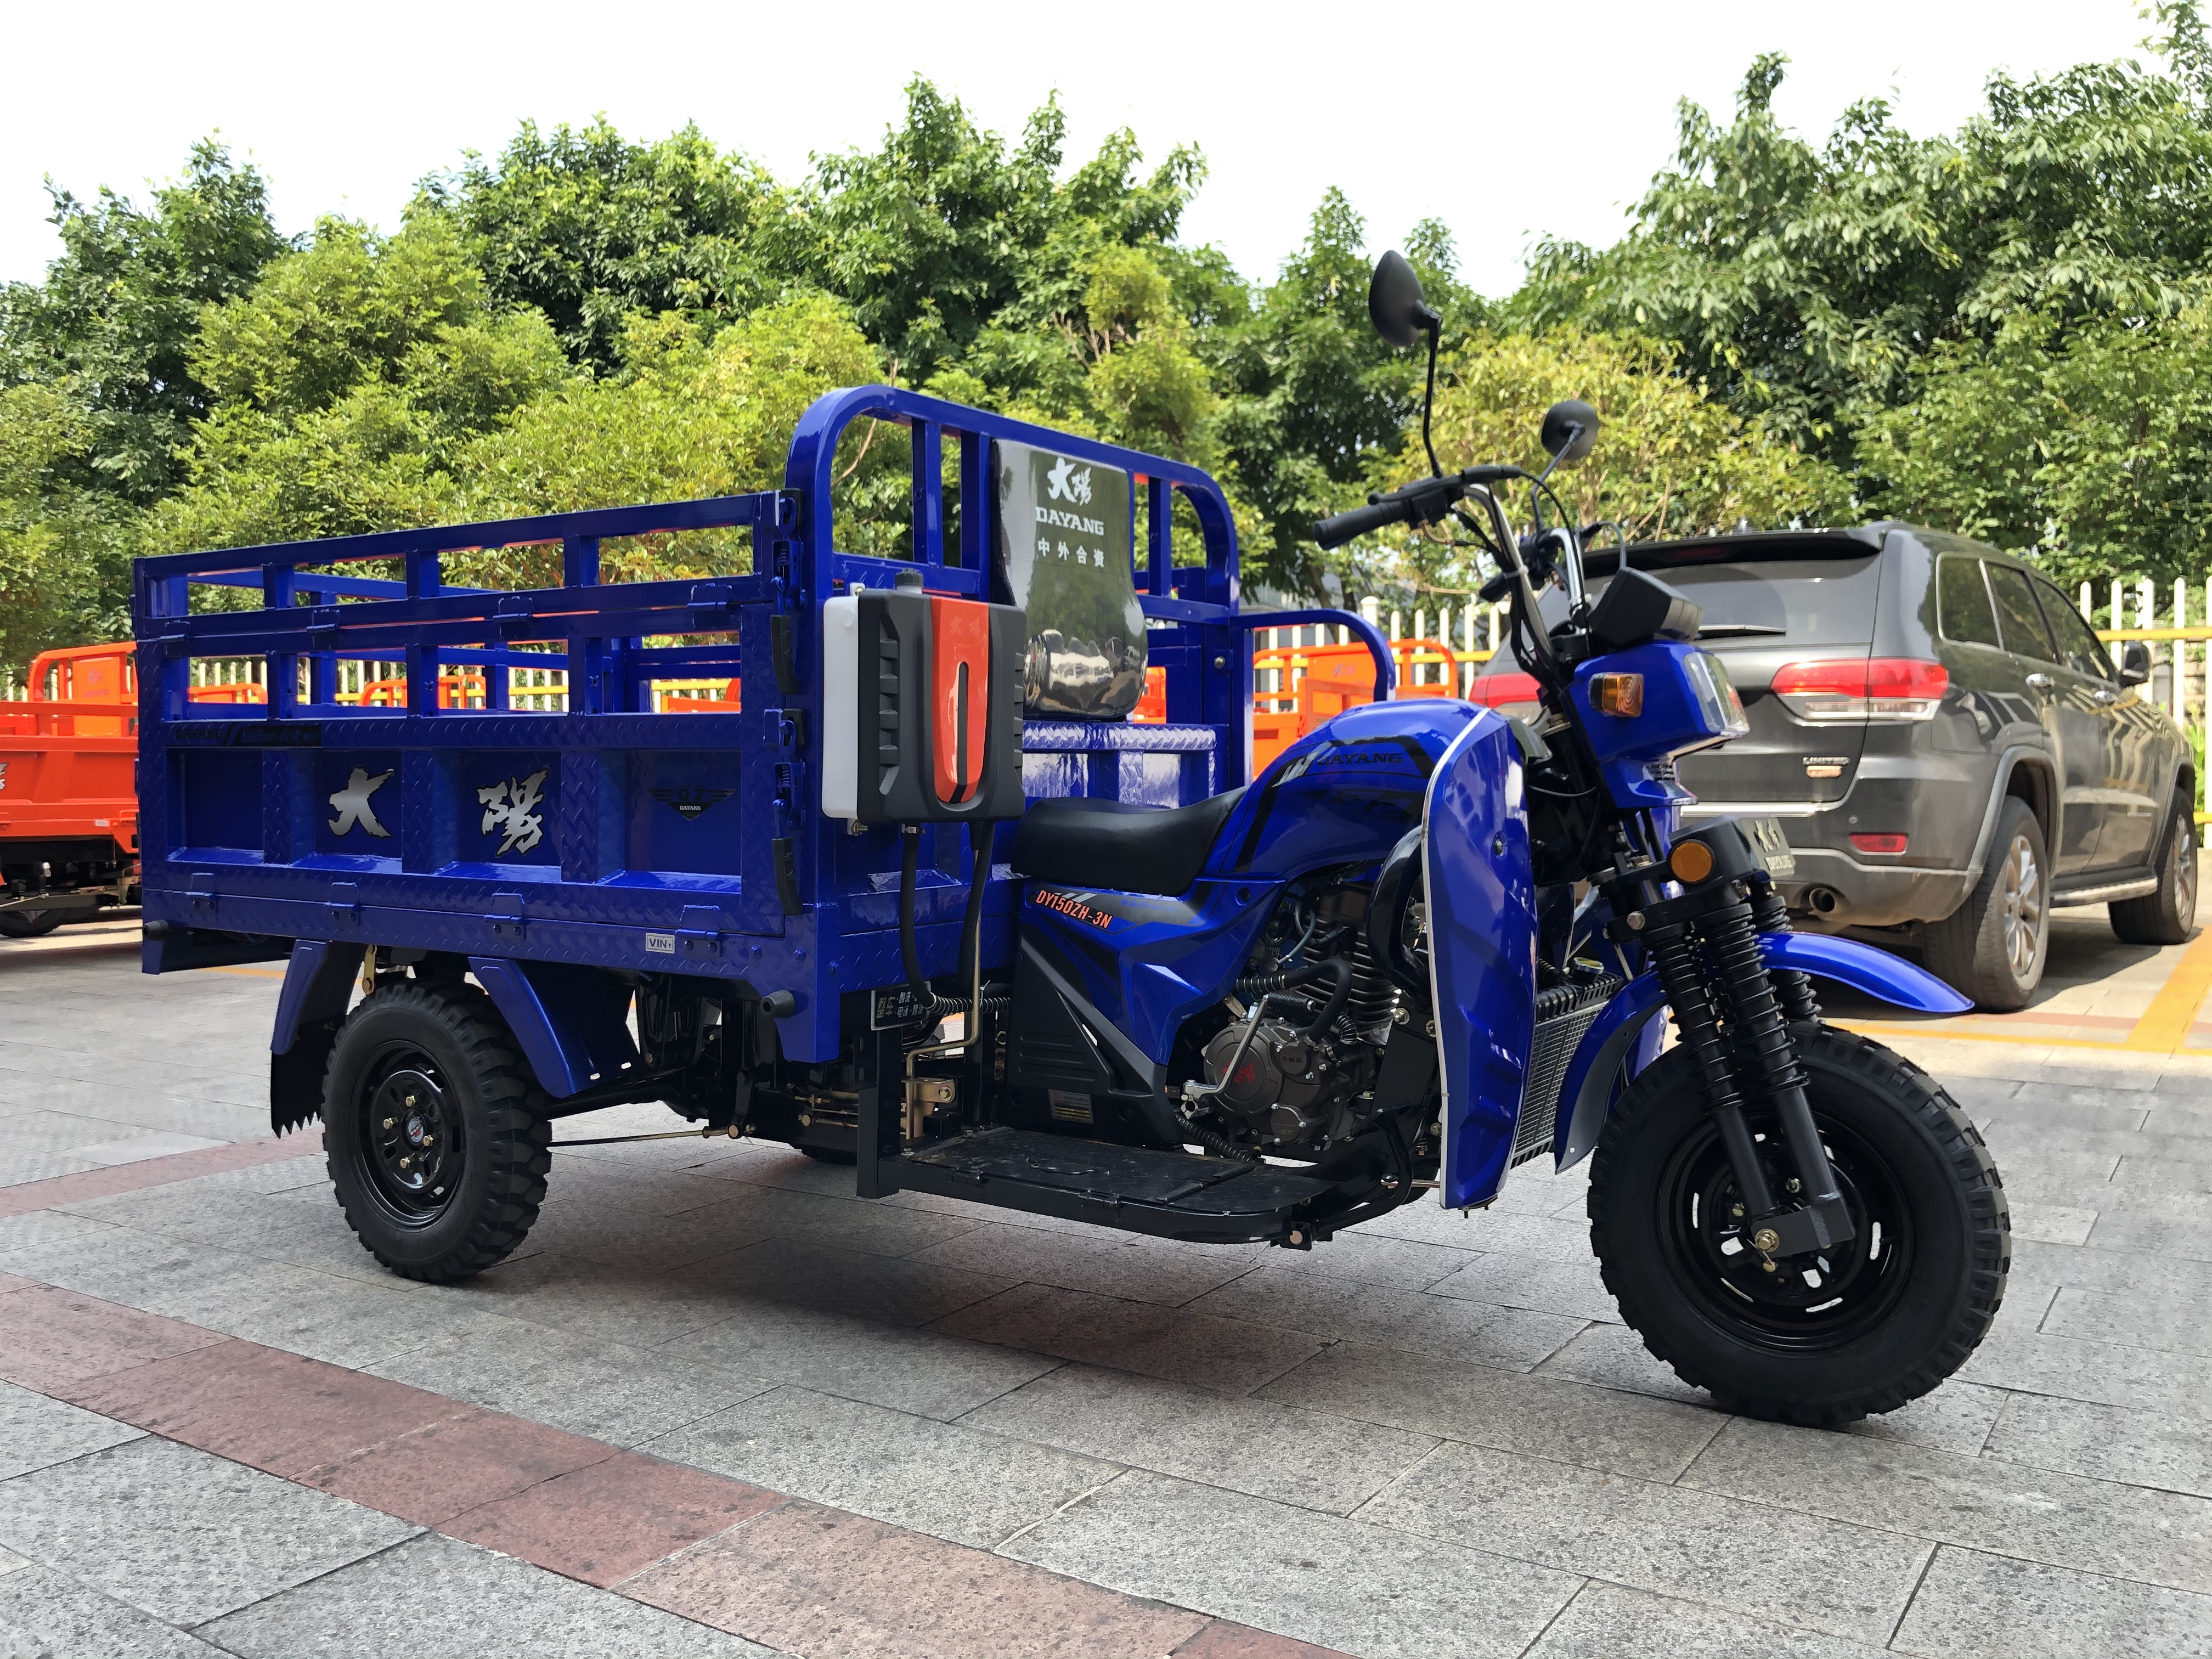 Q2 Heavy loading truck cargo tricycle 175cc/200cc/250cc